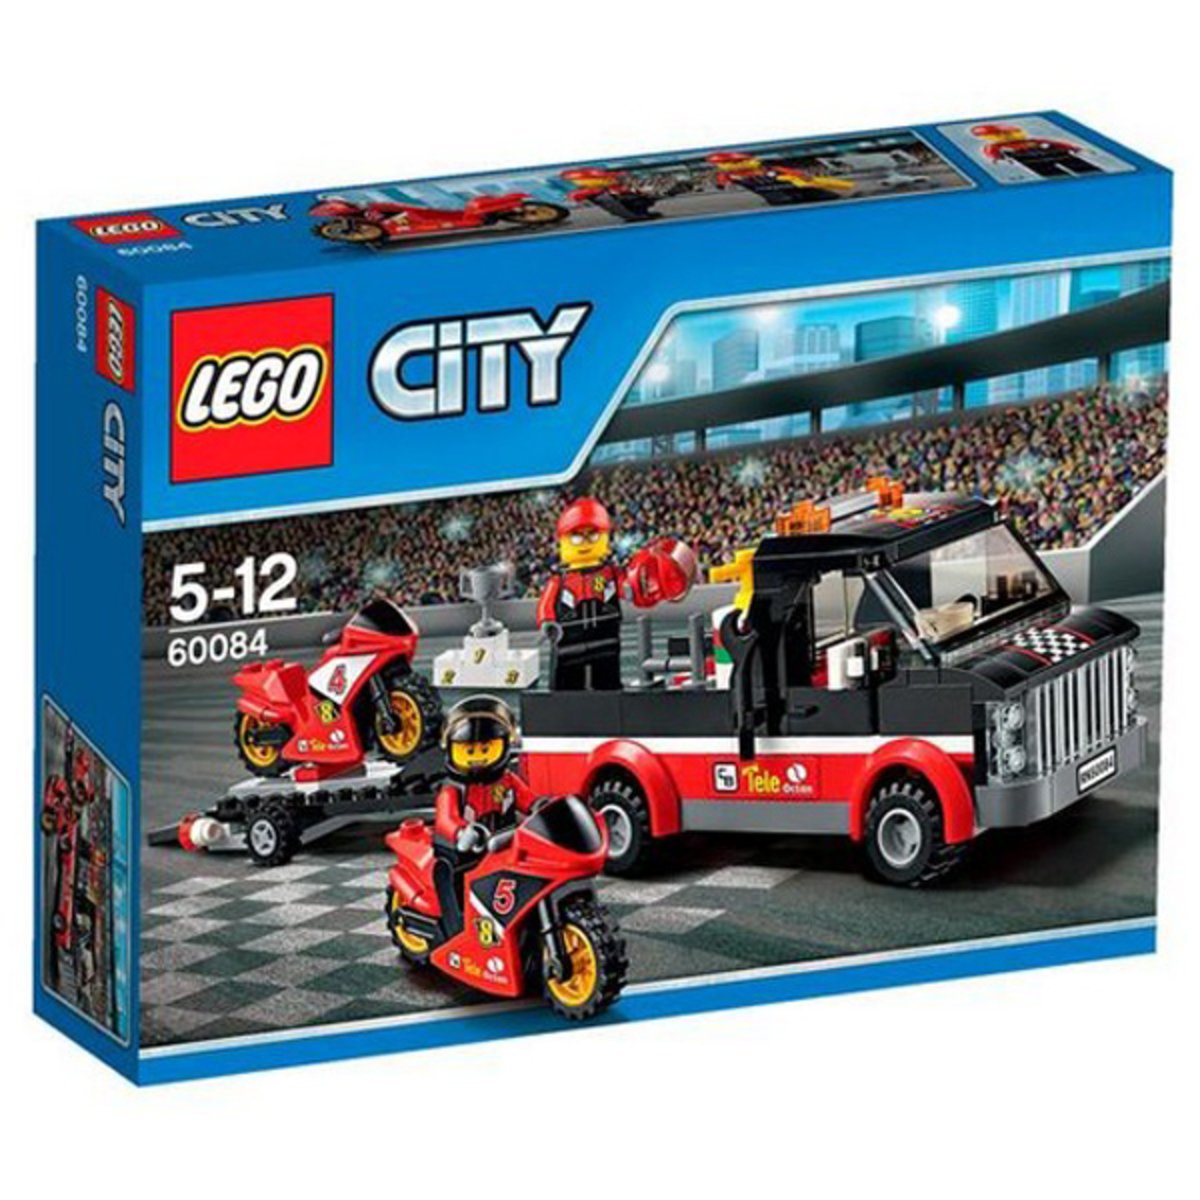 Lego 10967 Duplo Rescue Police Motorcycle Building Kit - 5pcs